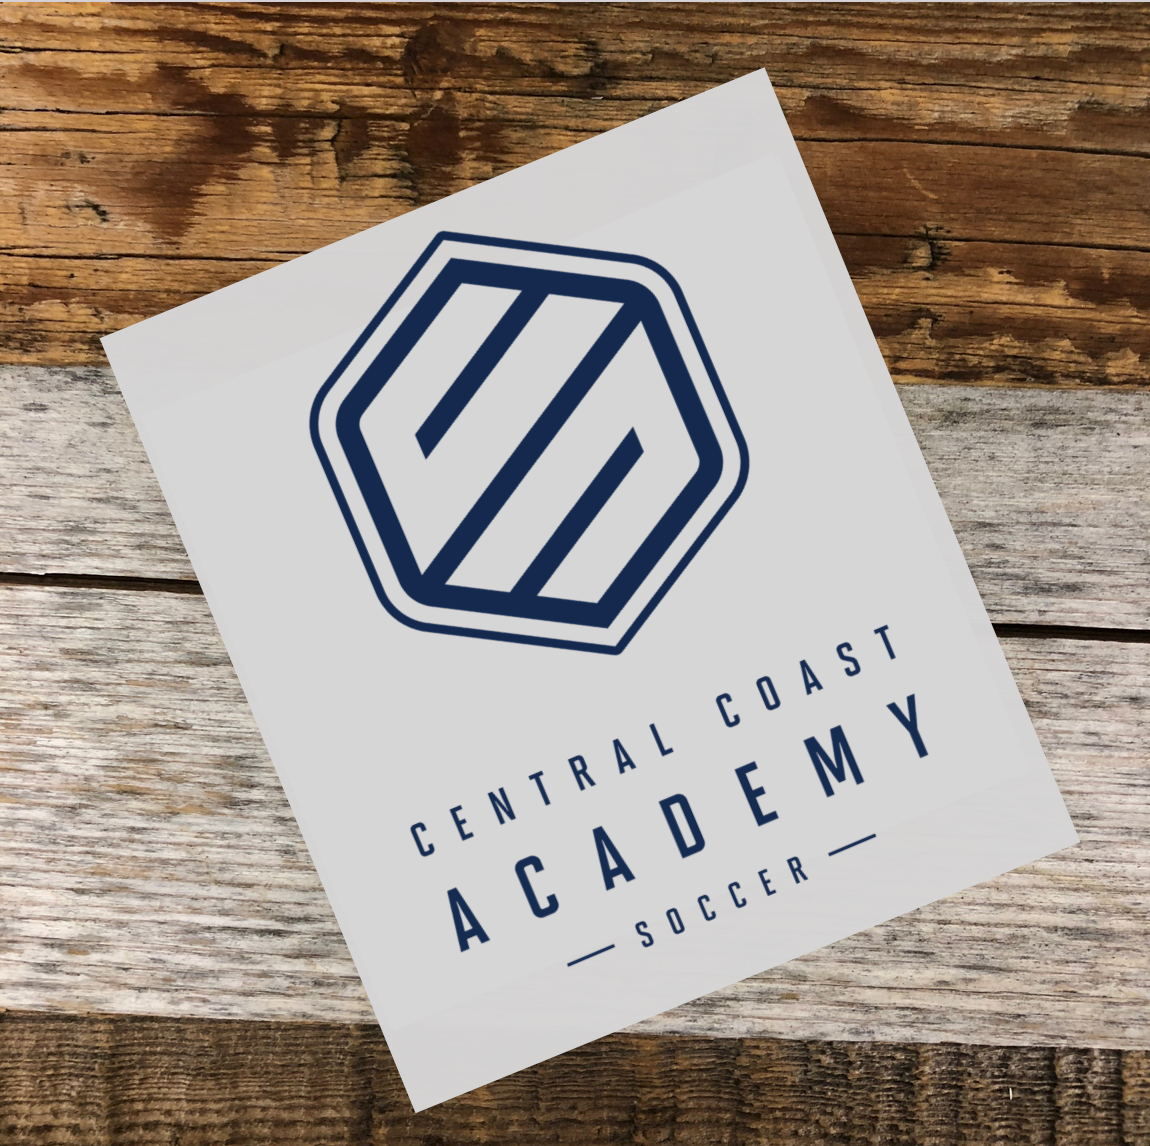 Central Coast Academy CCA sticker - 4" x 2.88" - CLEAR